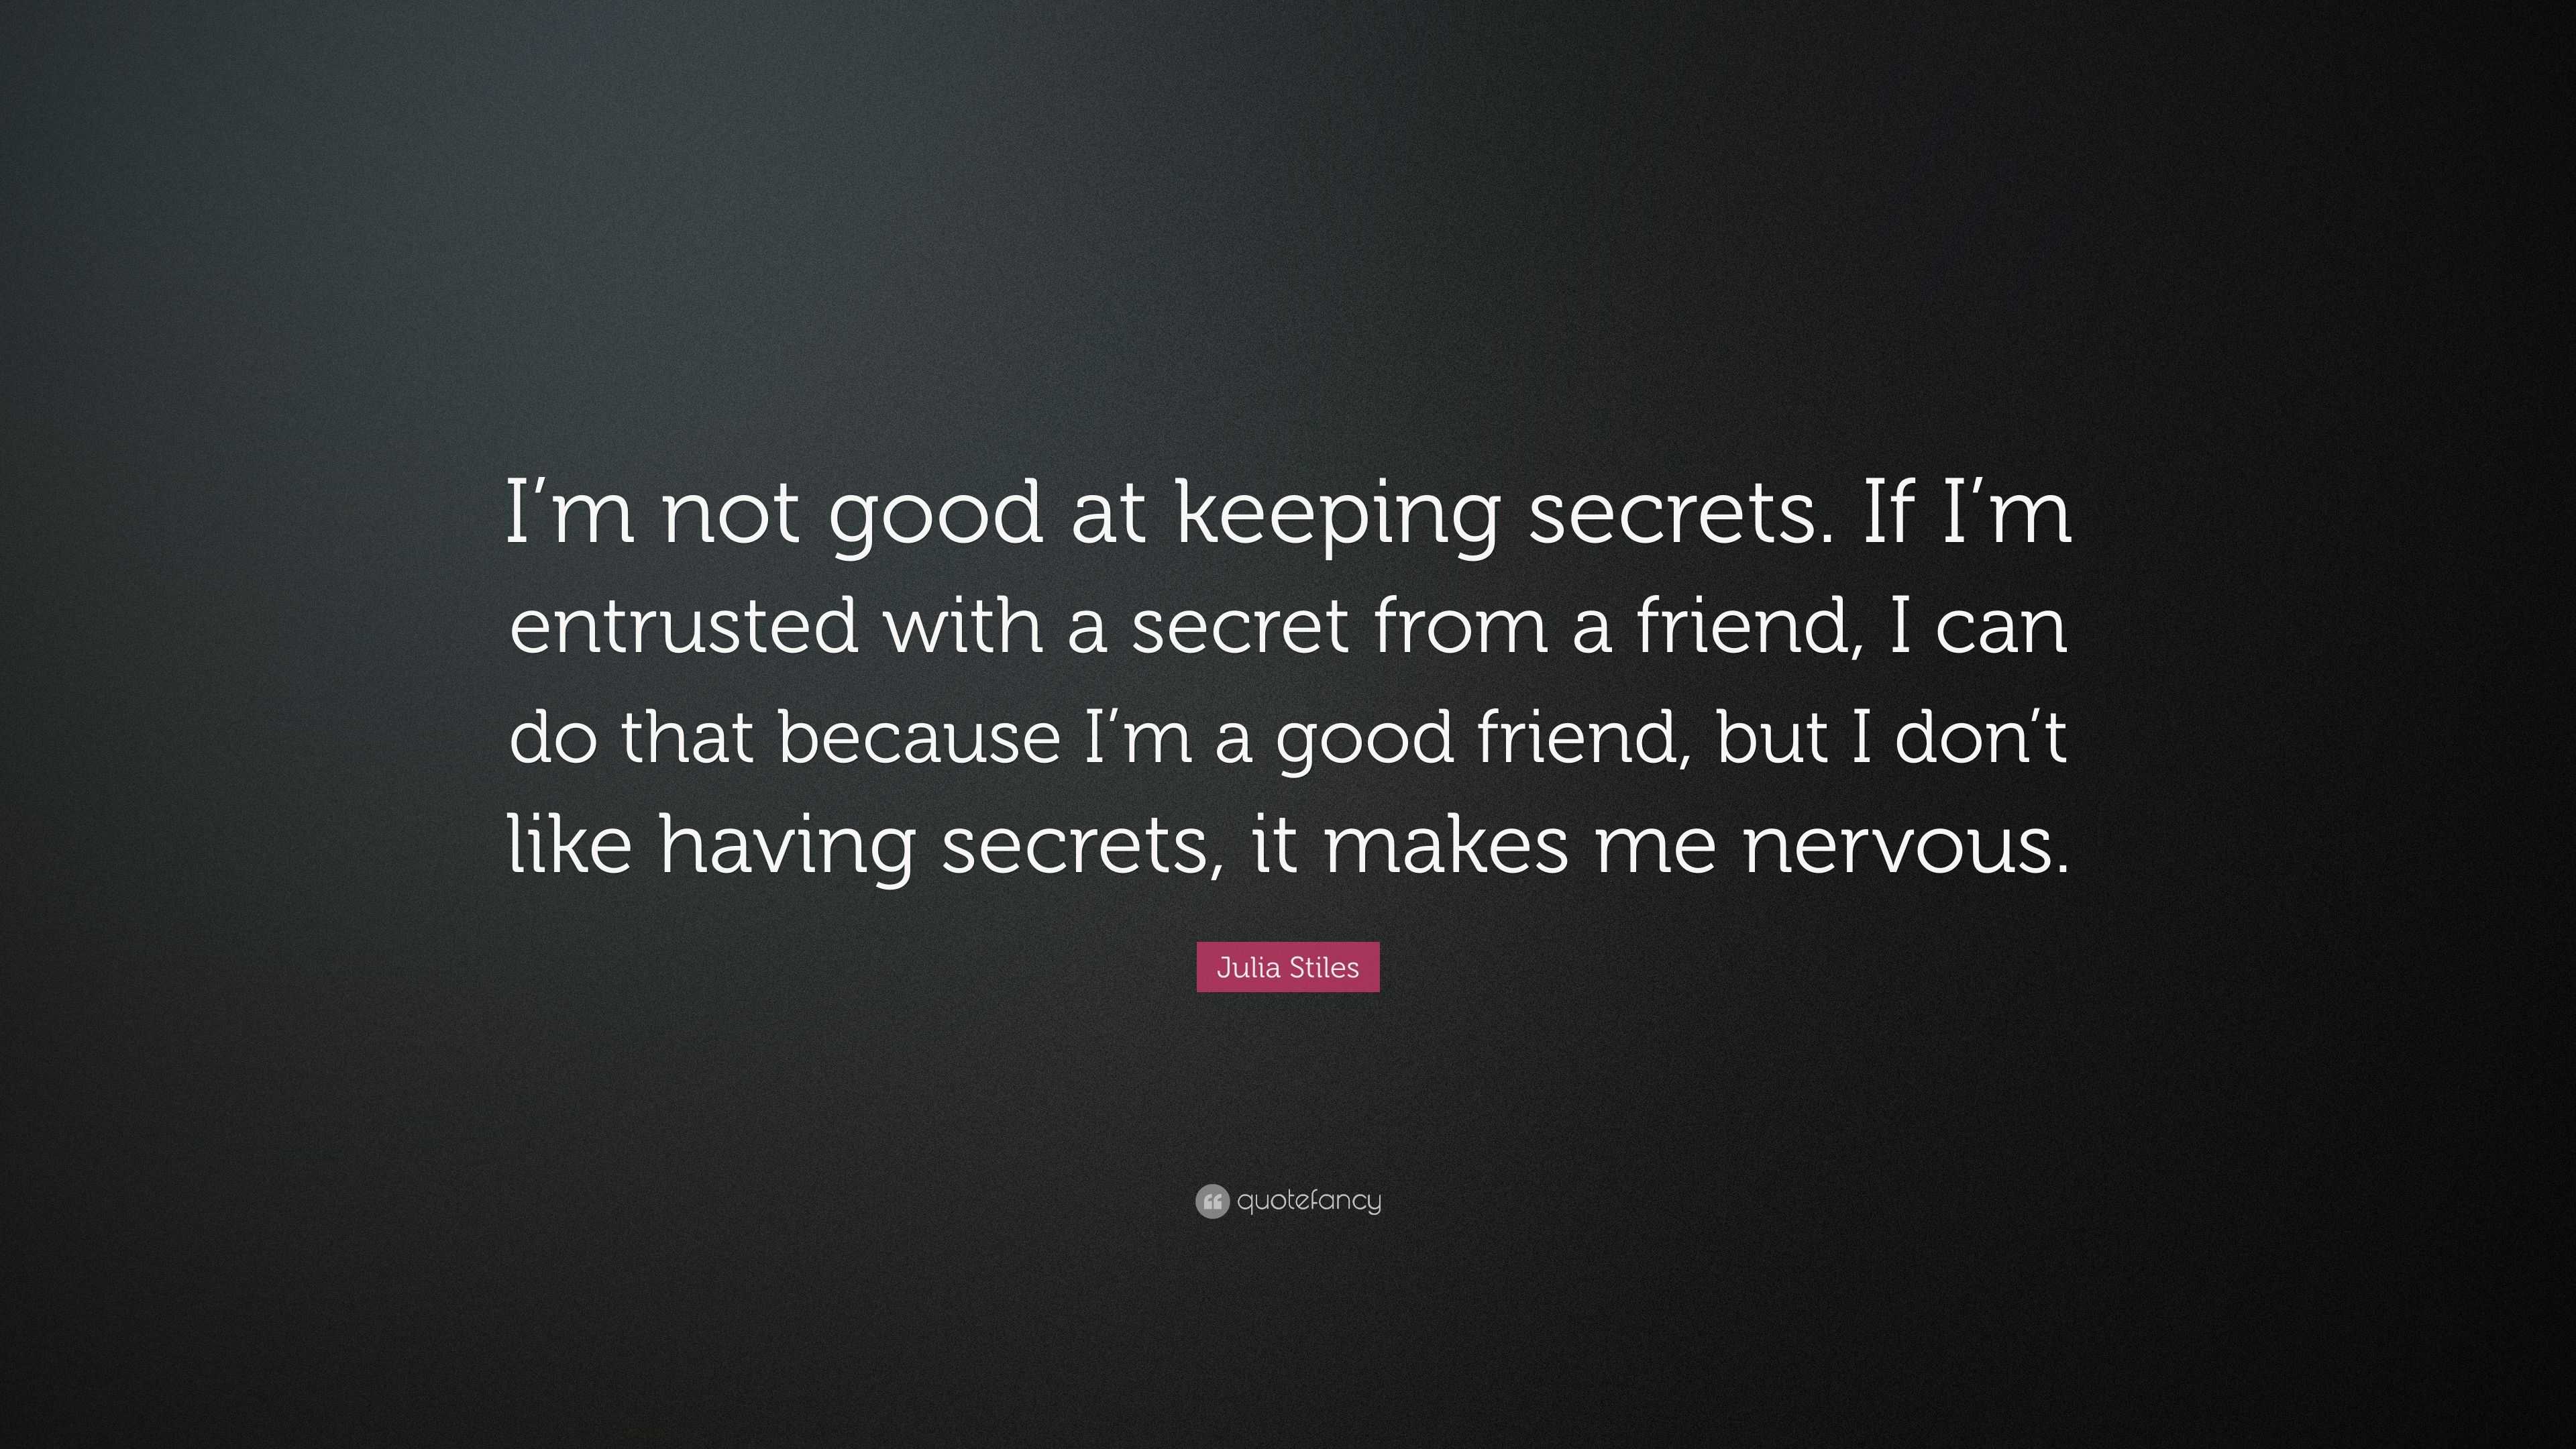 Secrets quotes about having 